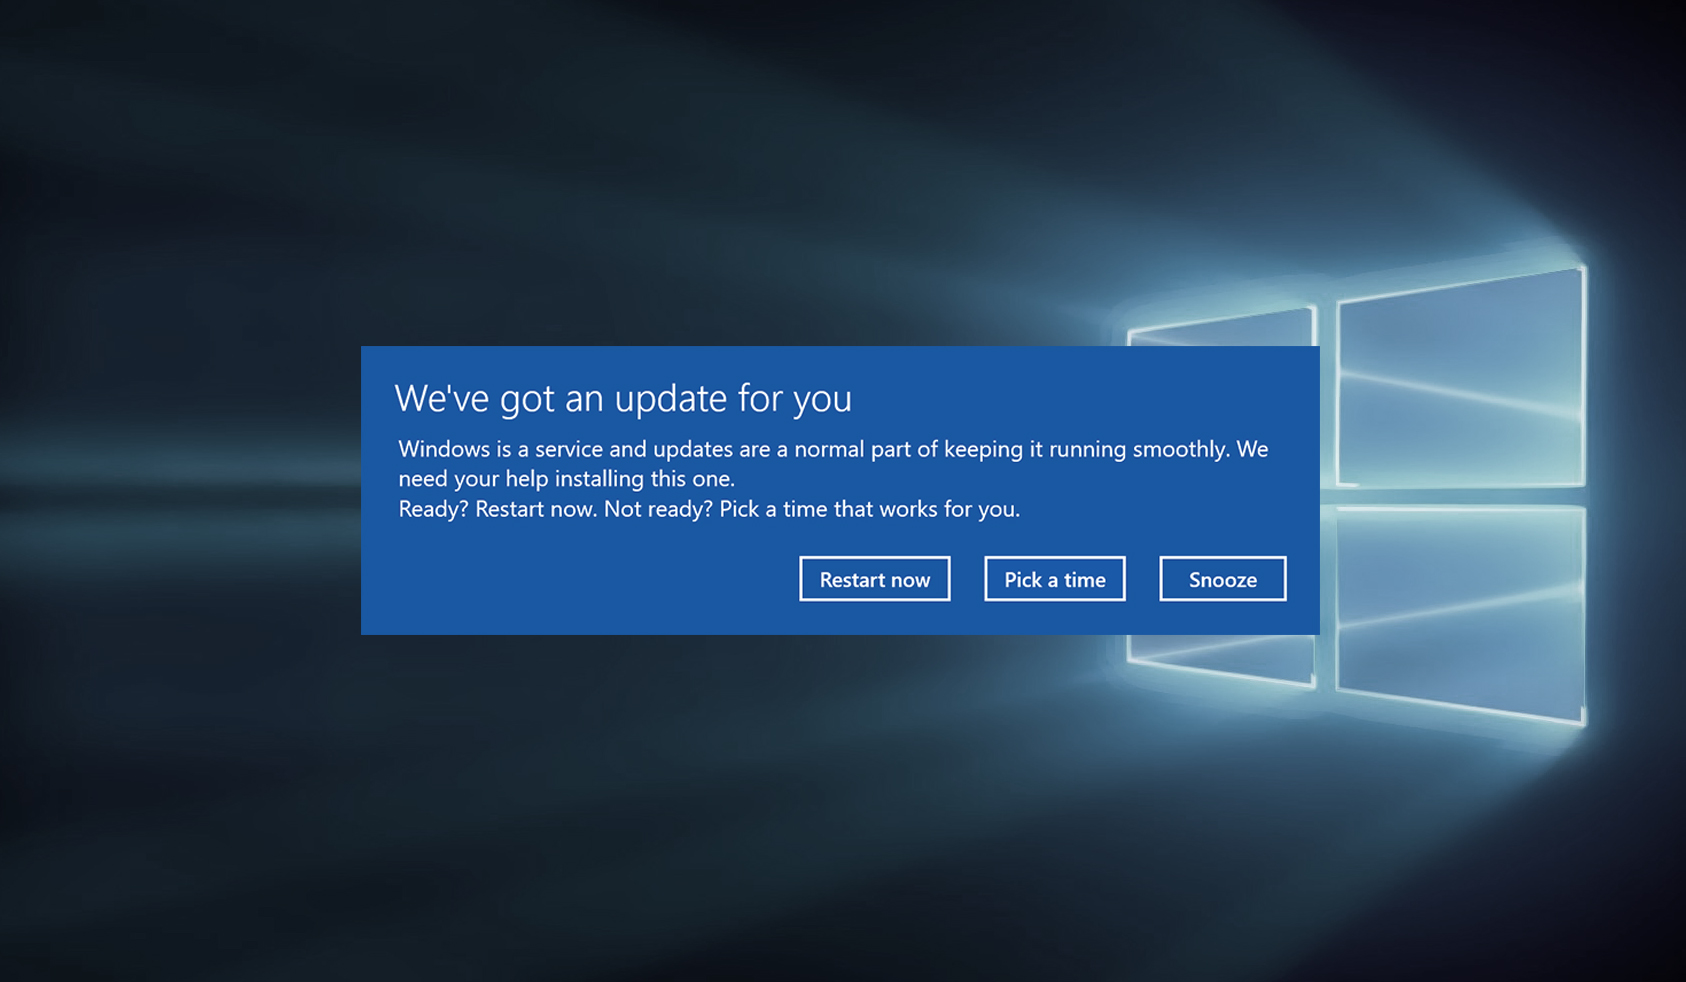 windows 10 latest update download